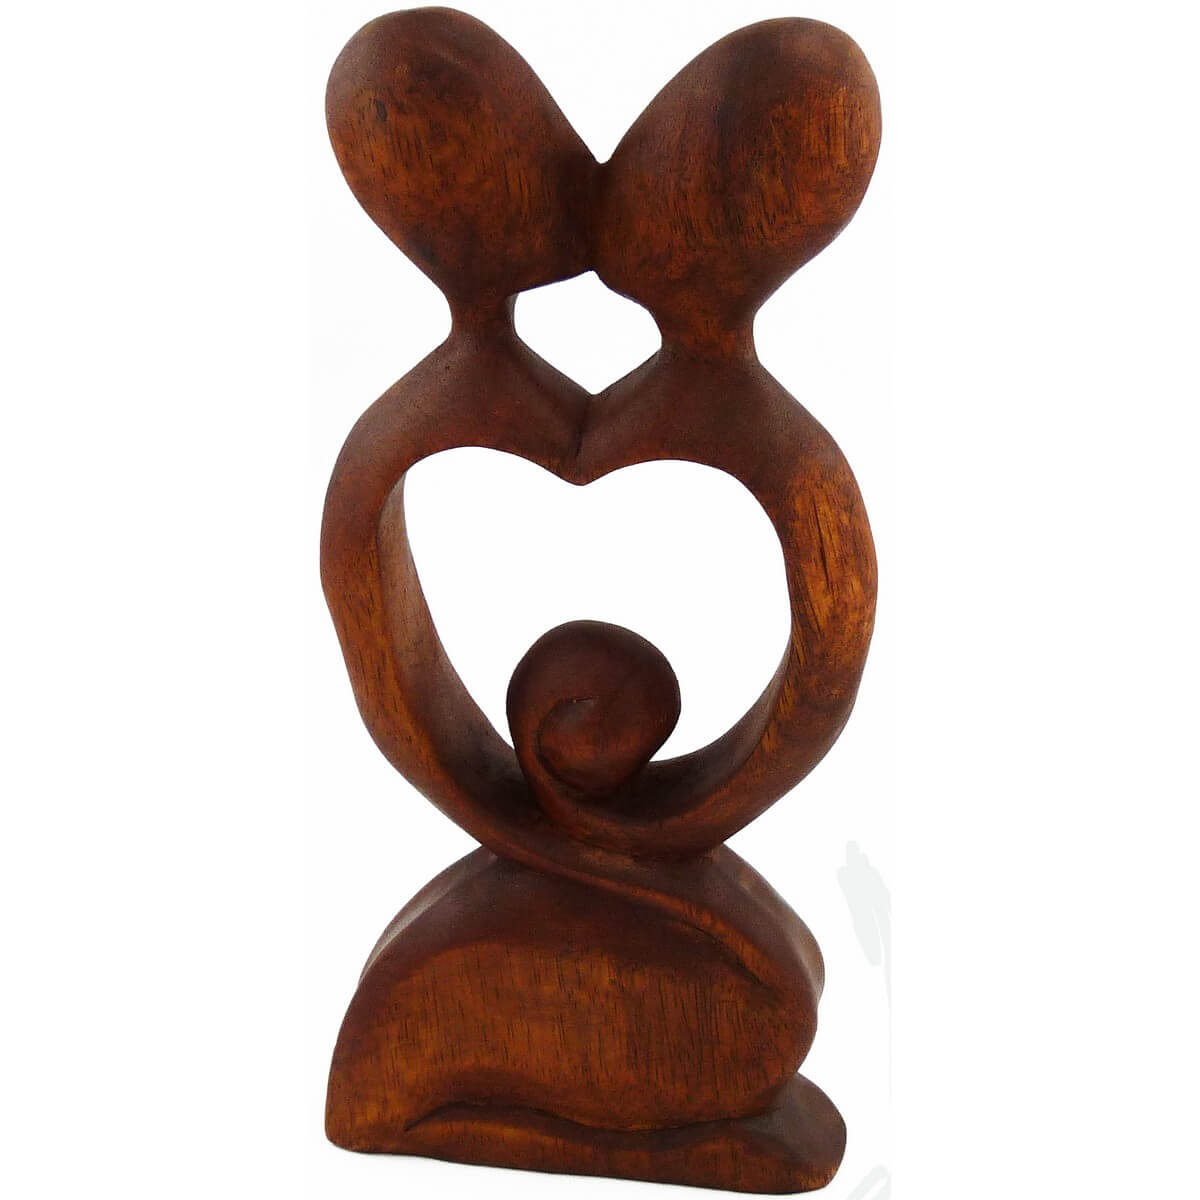 15 cm Holzfigur  abstrakt   romantische Umarmung  Soarholz  Dekoration  Höhe 